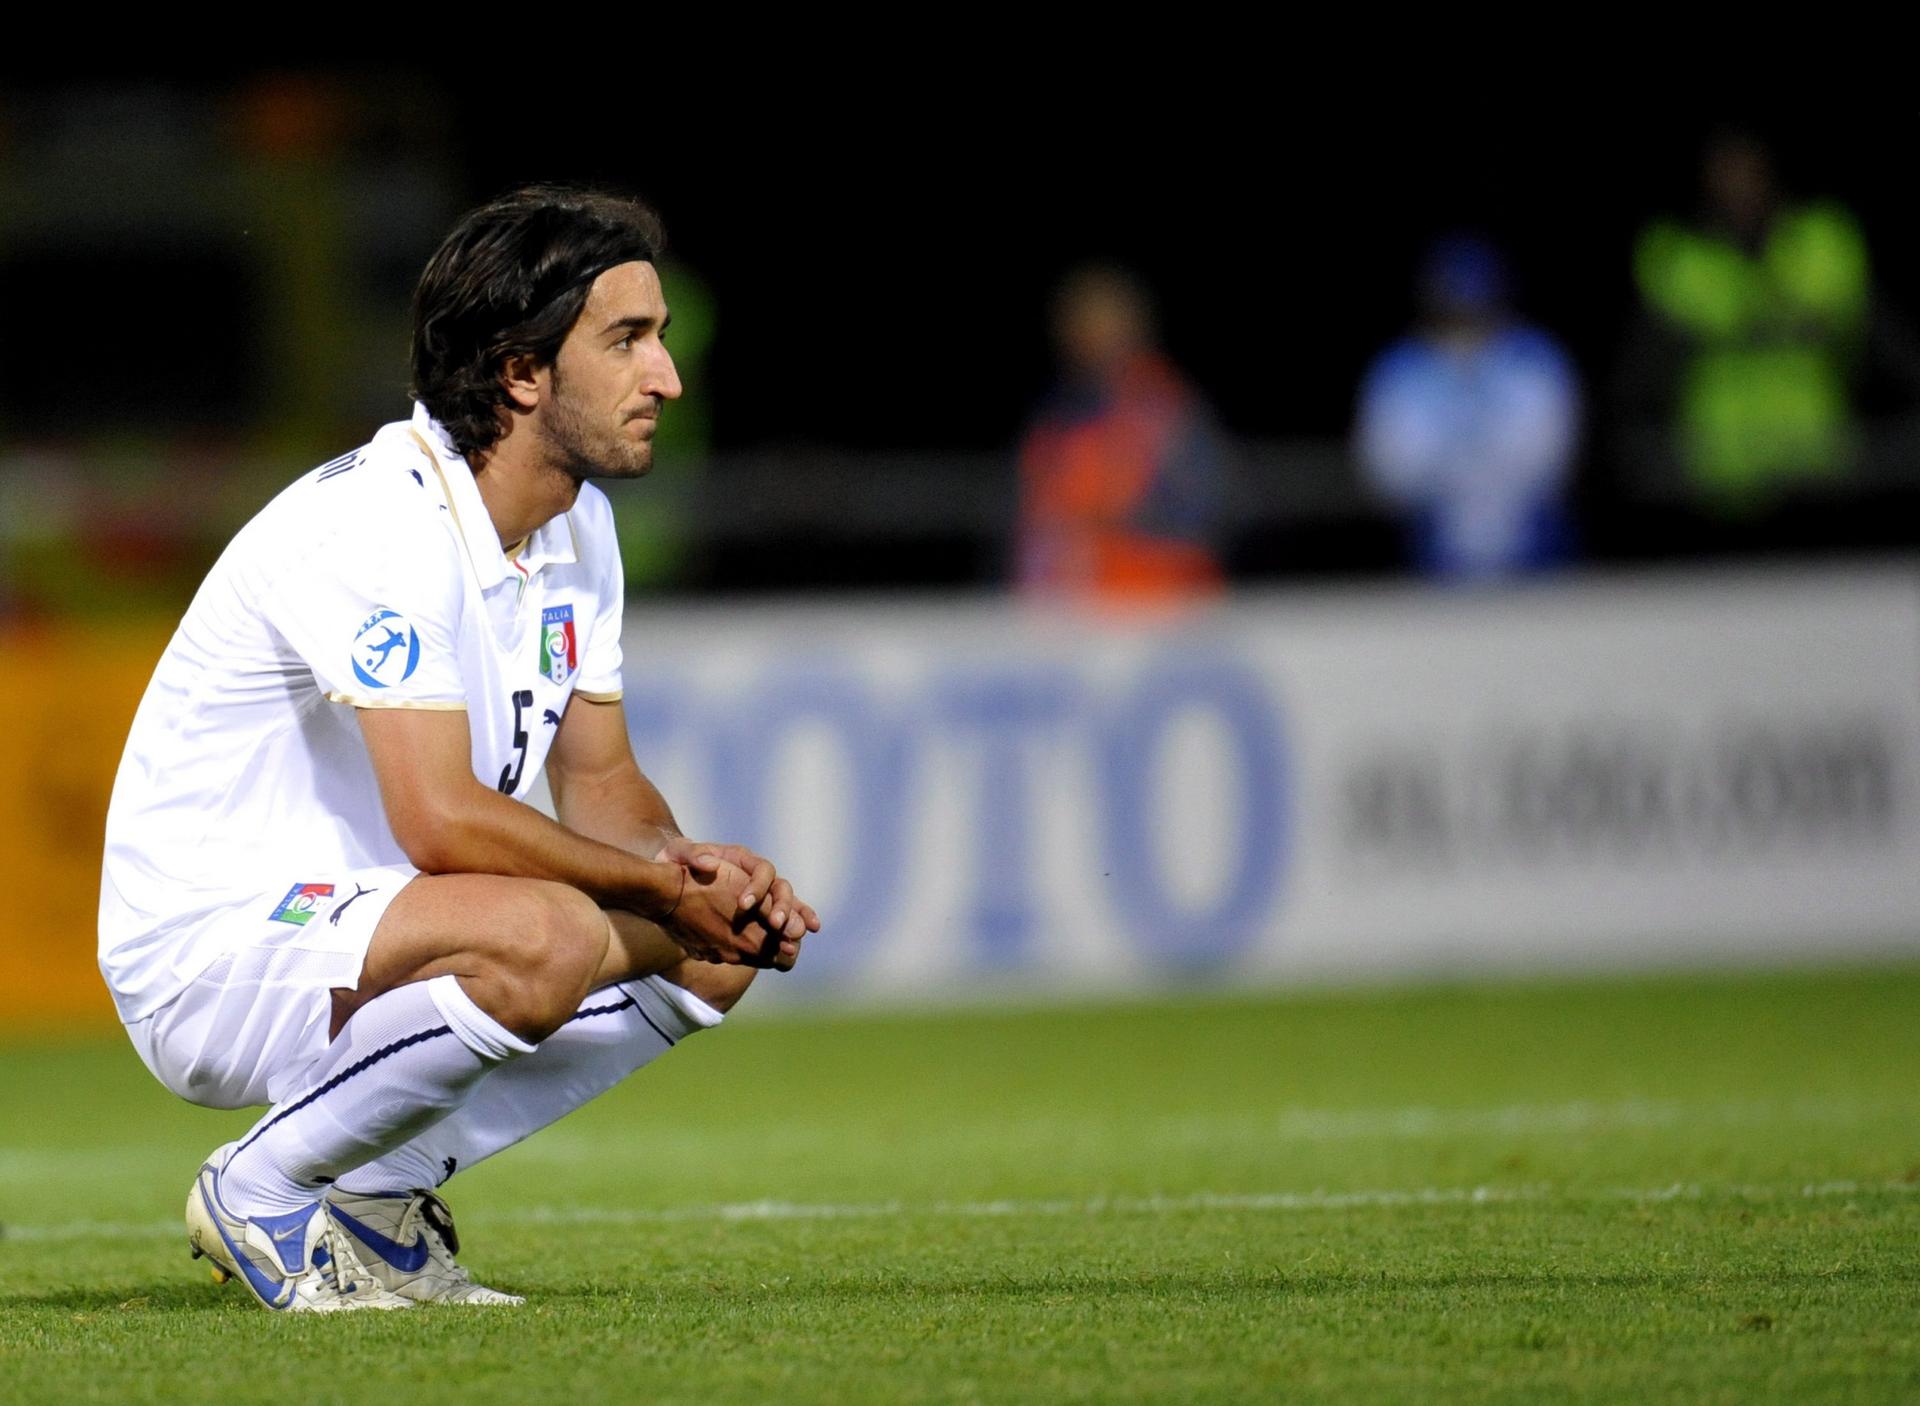 Italian soccer player Piermario Morosini who died of cardiac arrest during a Serie B match in April. Photo: EPA